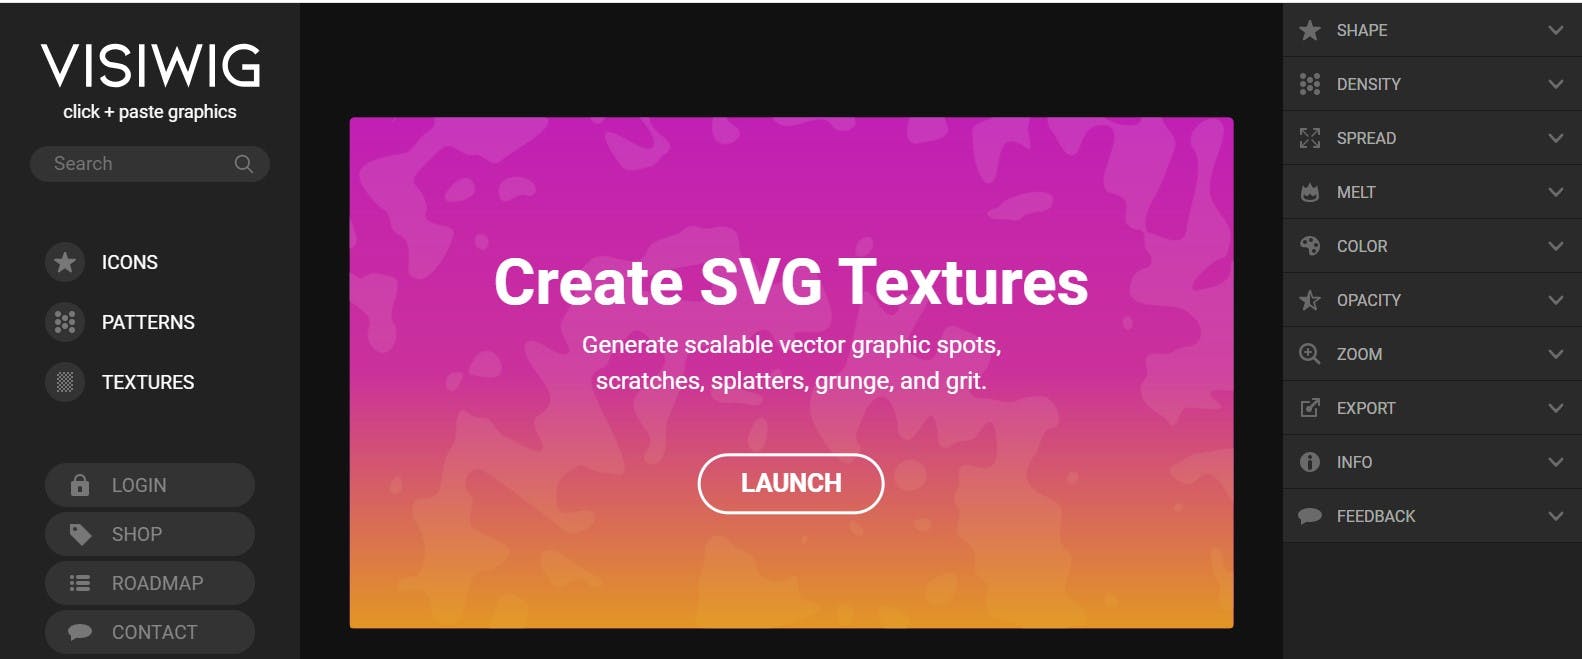 Create SVG Textures